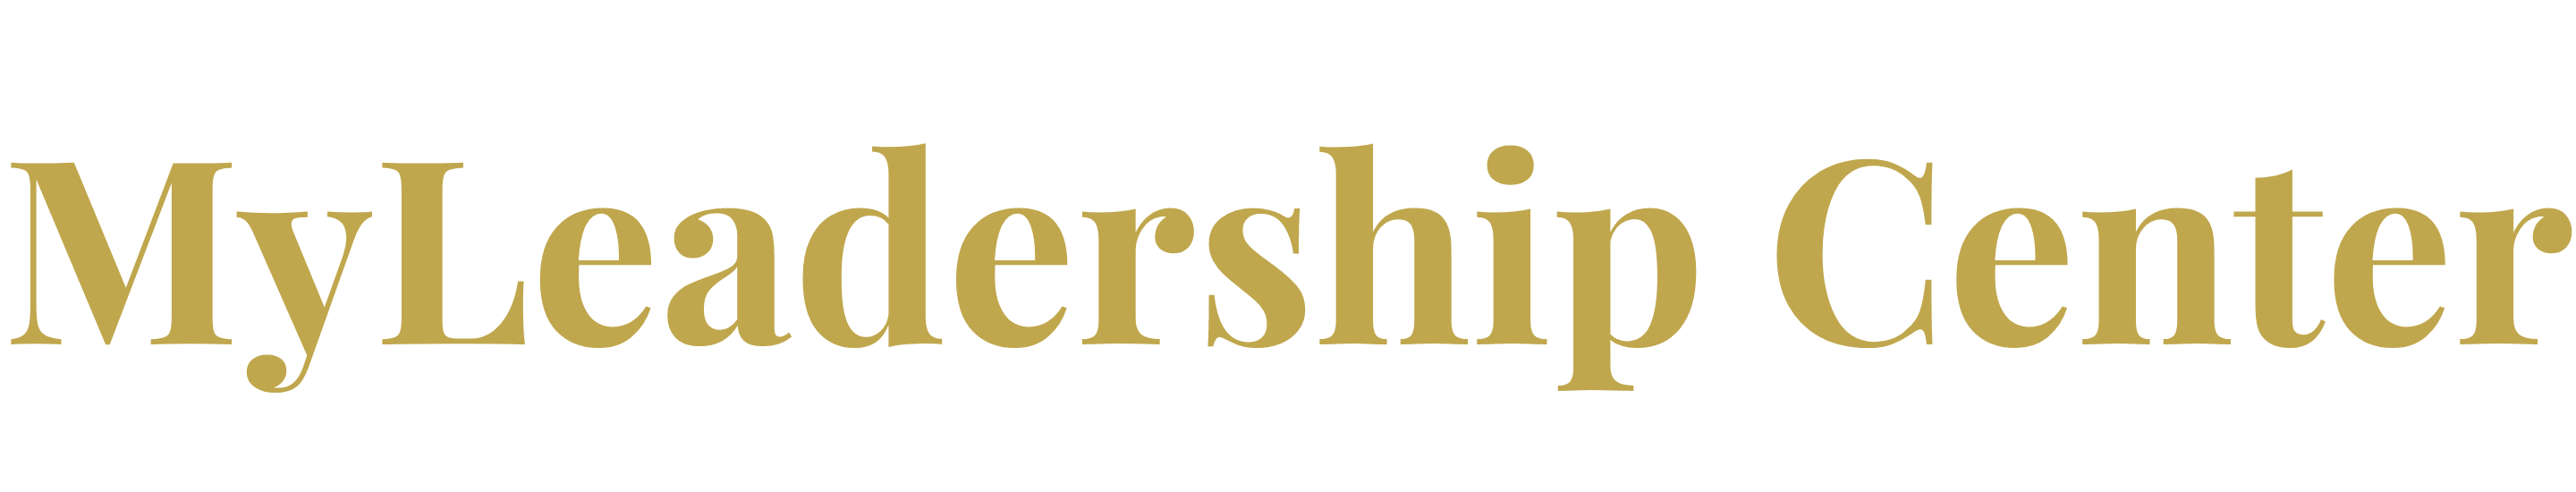 MyLeadership Center logo